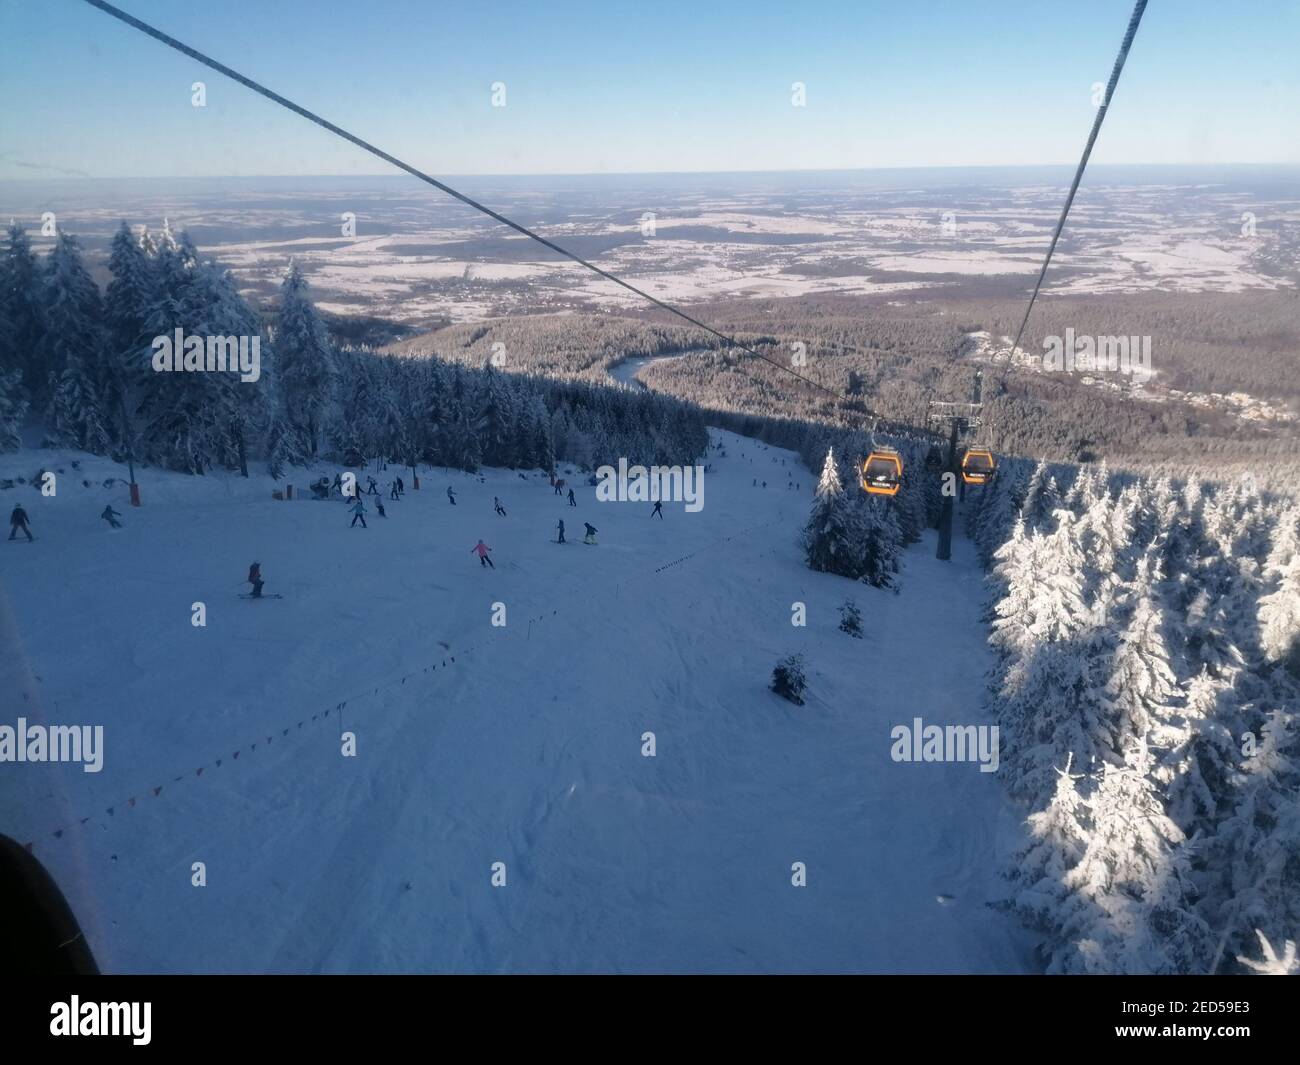 volle Skipisten, nach gelockerten Corona Regeln in Bad Flinsberg / Swieradow-Zdroj, Polen am 14.2.2021 Stock Photo